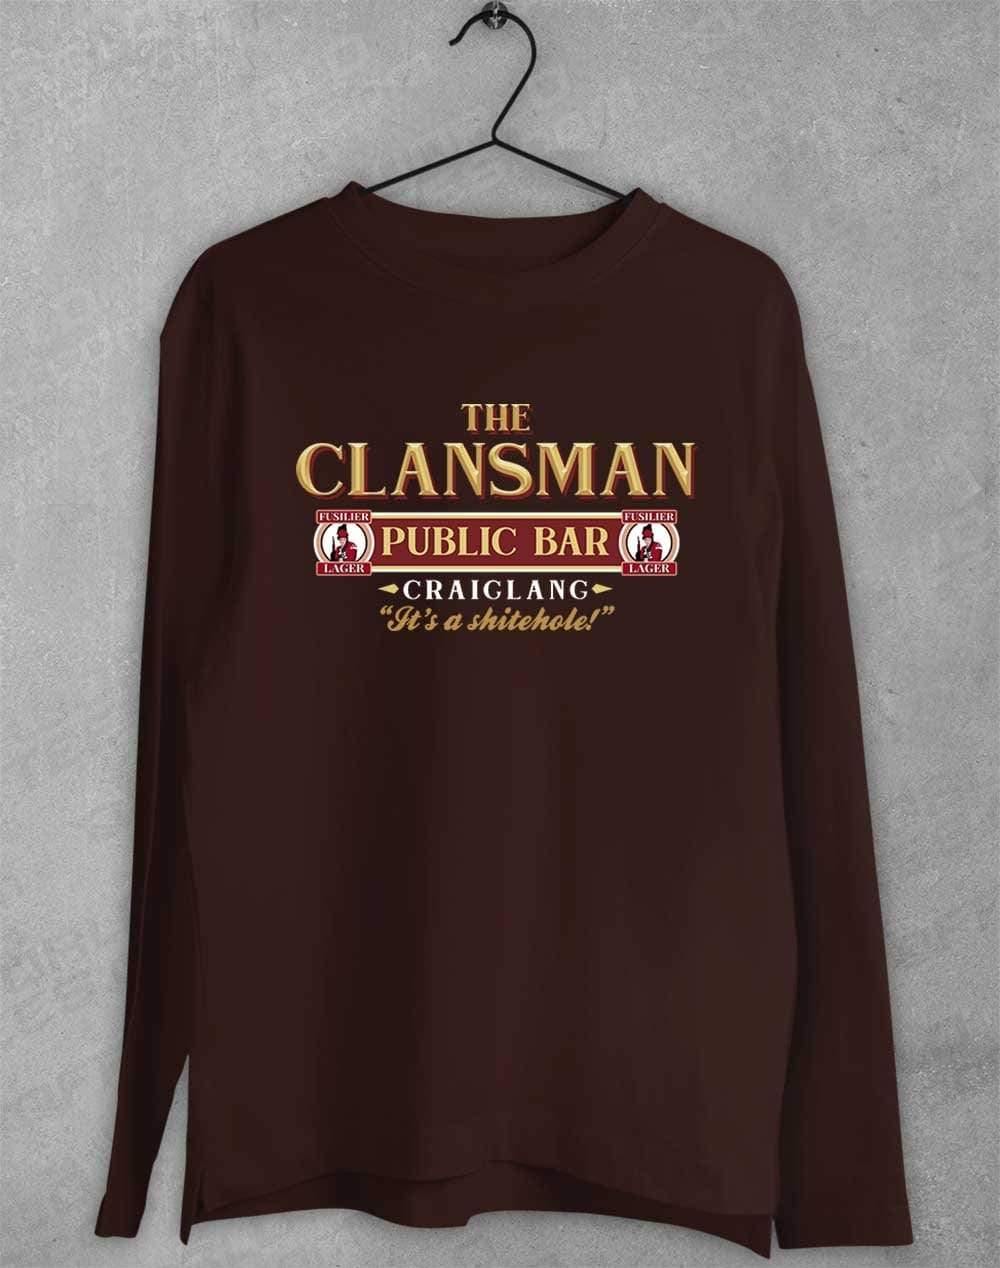 The Clansman Craiglang Long Sleeve T-Shirt S / Dark Chocolate  - Off World Tees